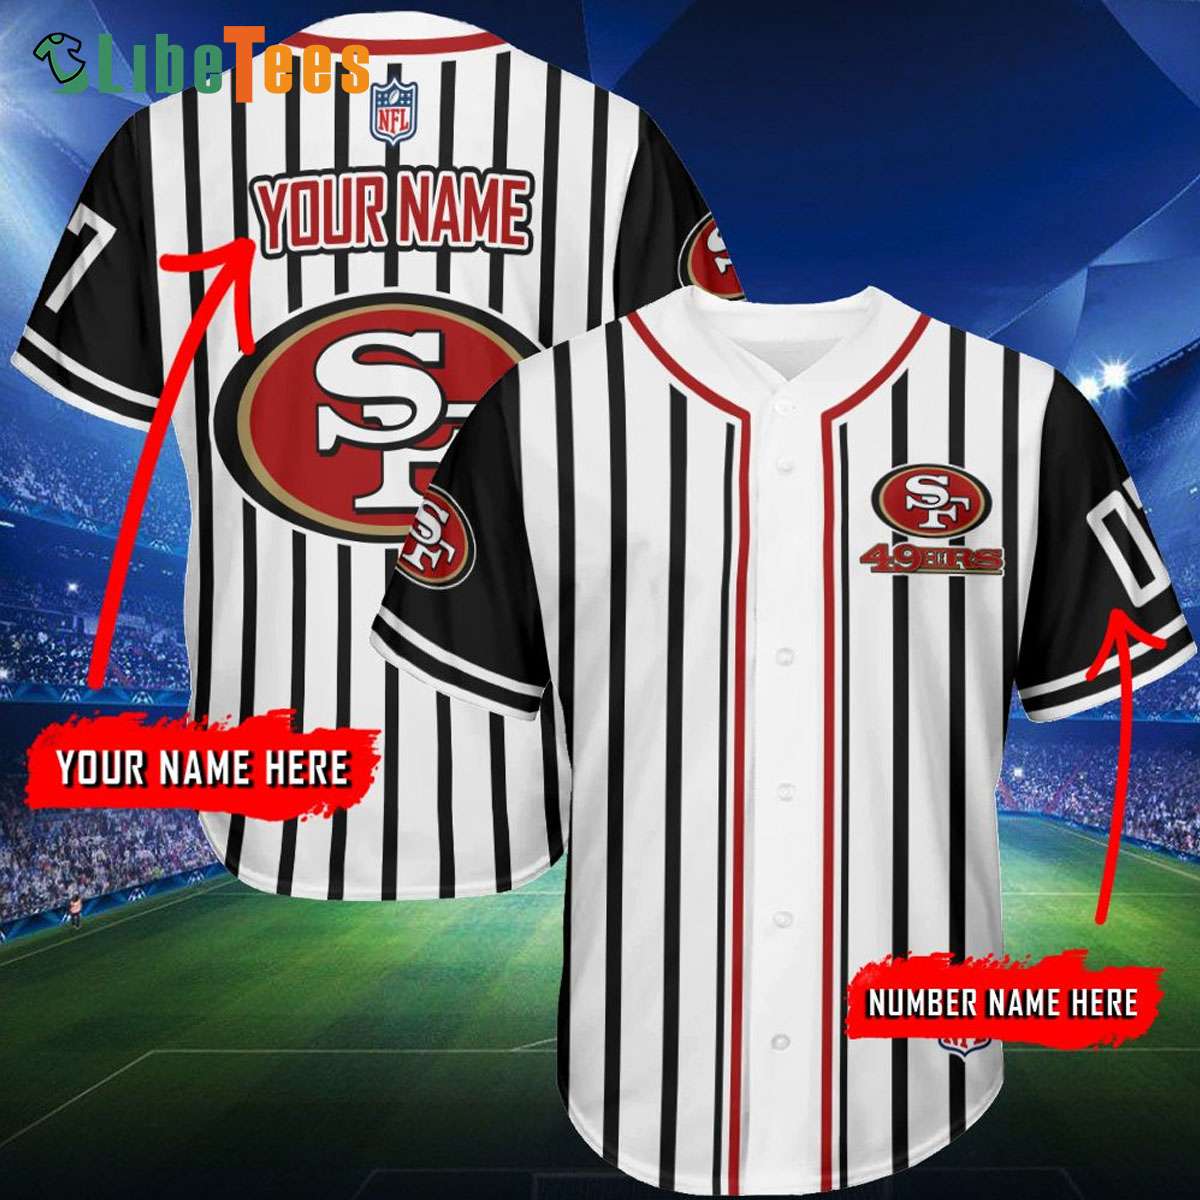 49ers custom black jersey